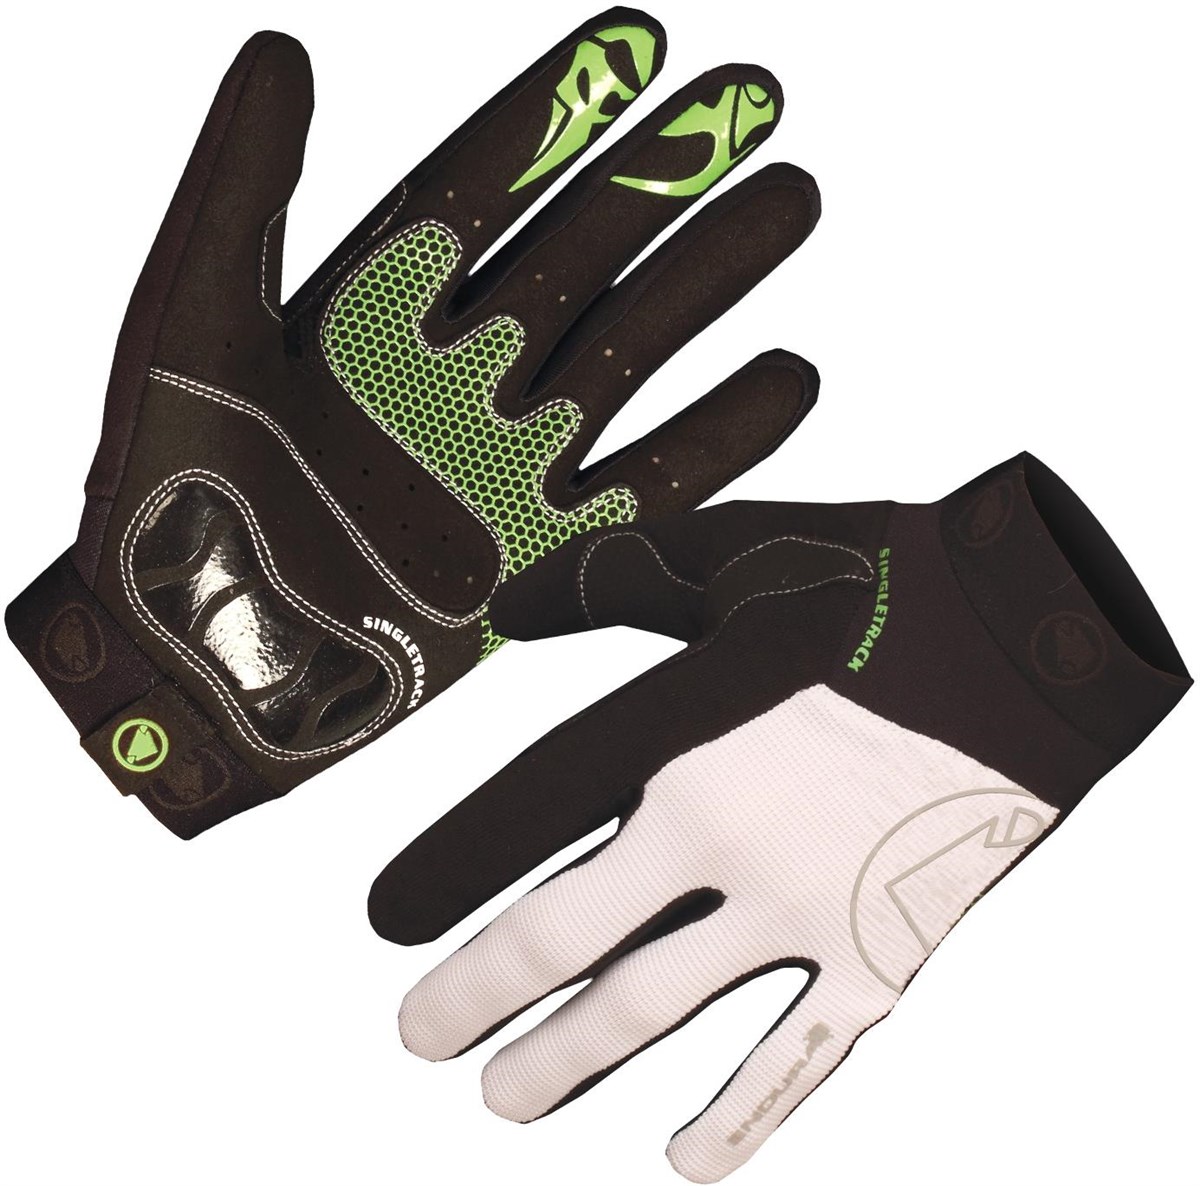 Endura SingleTrack II Long Finger Cycling Gloves product image